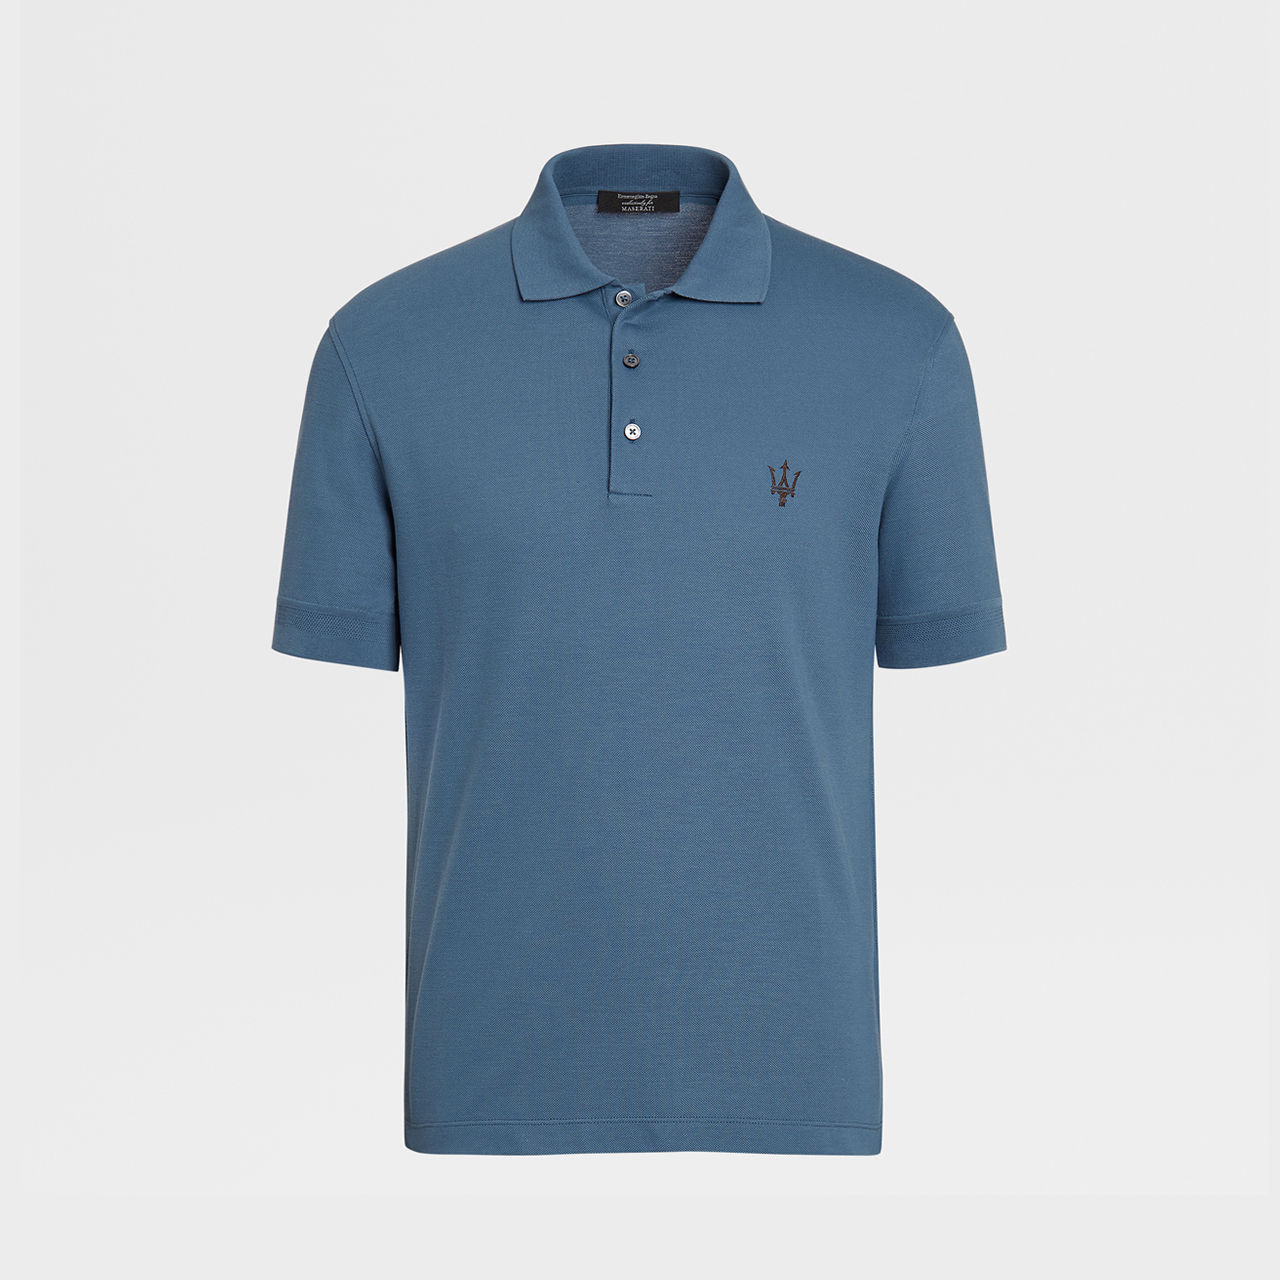 Maserati Light blue polo shirt with trident logo